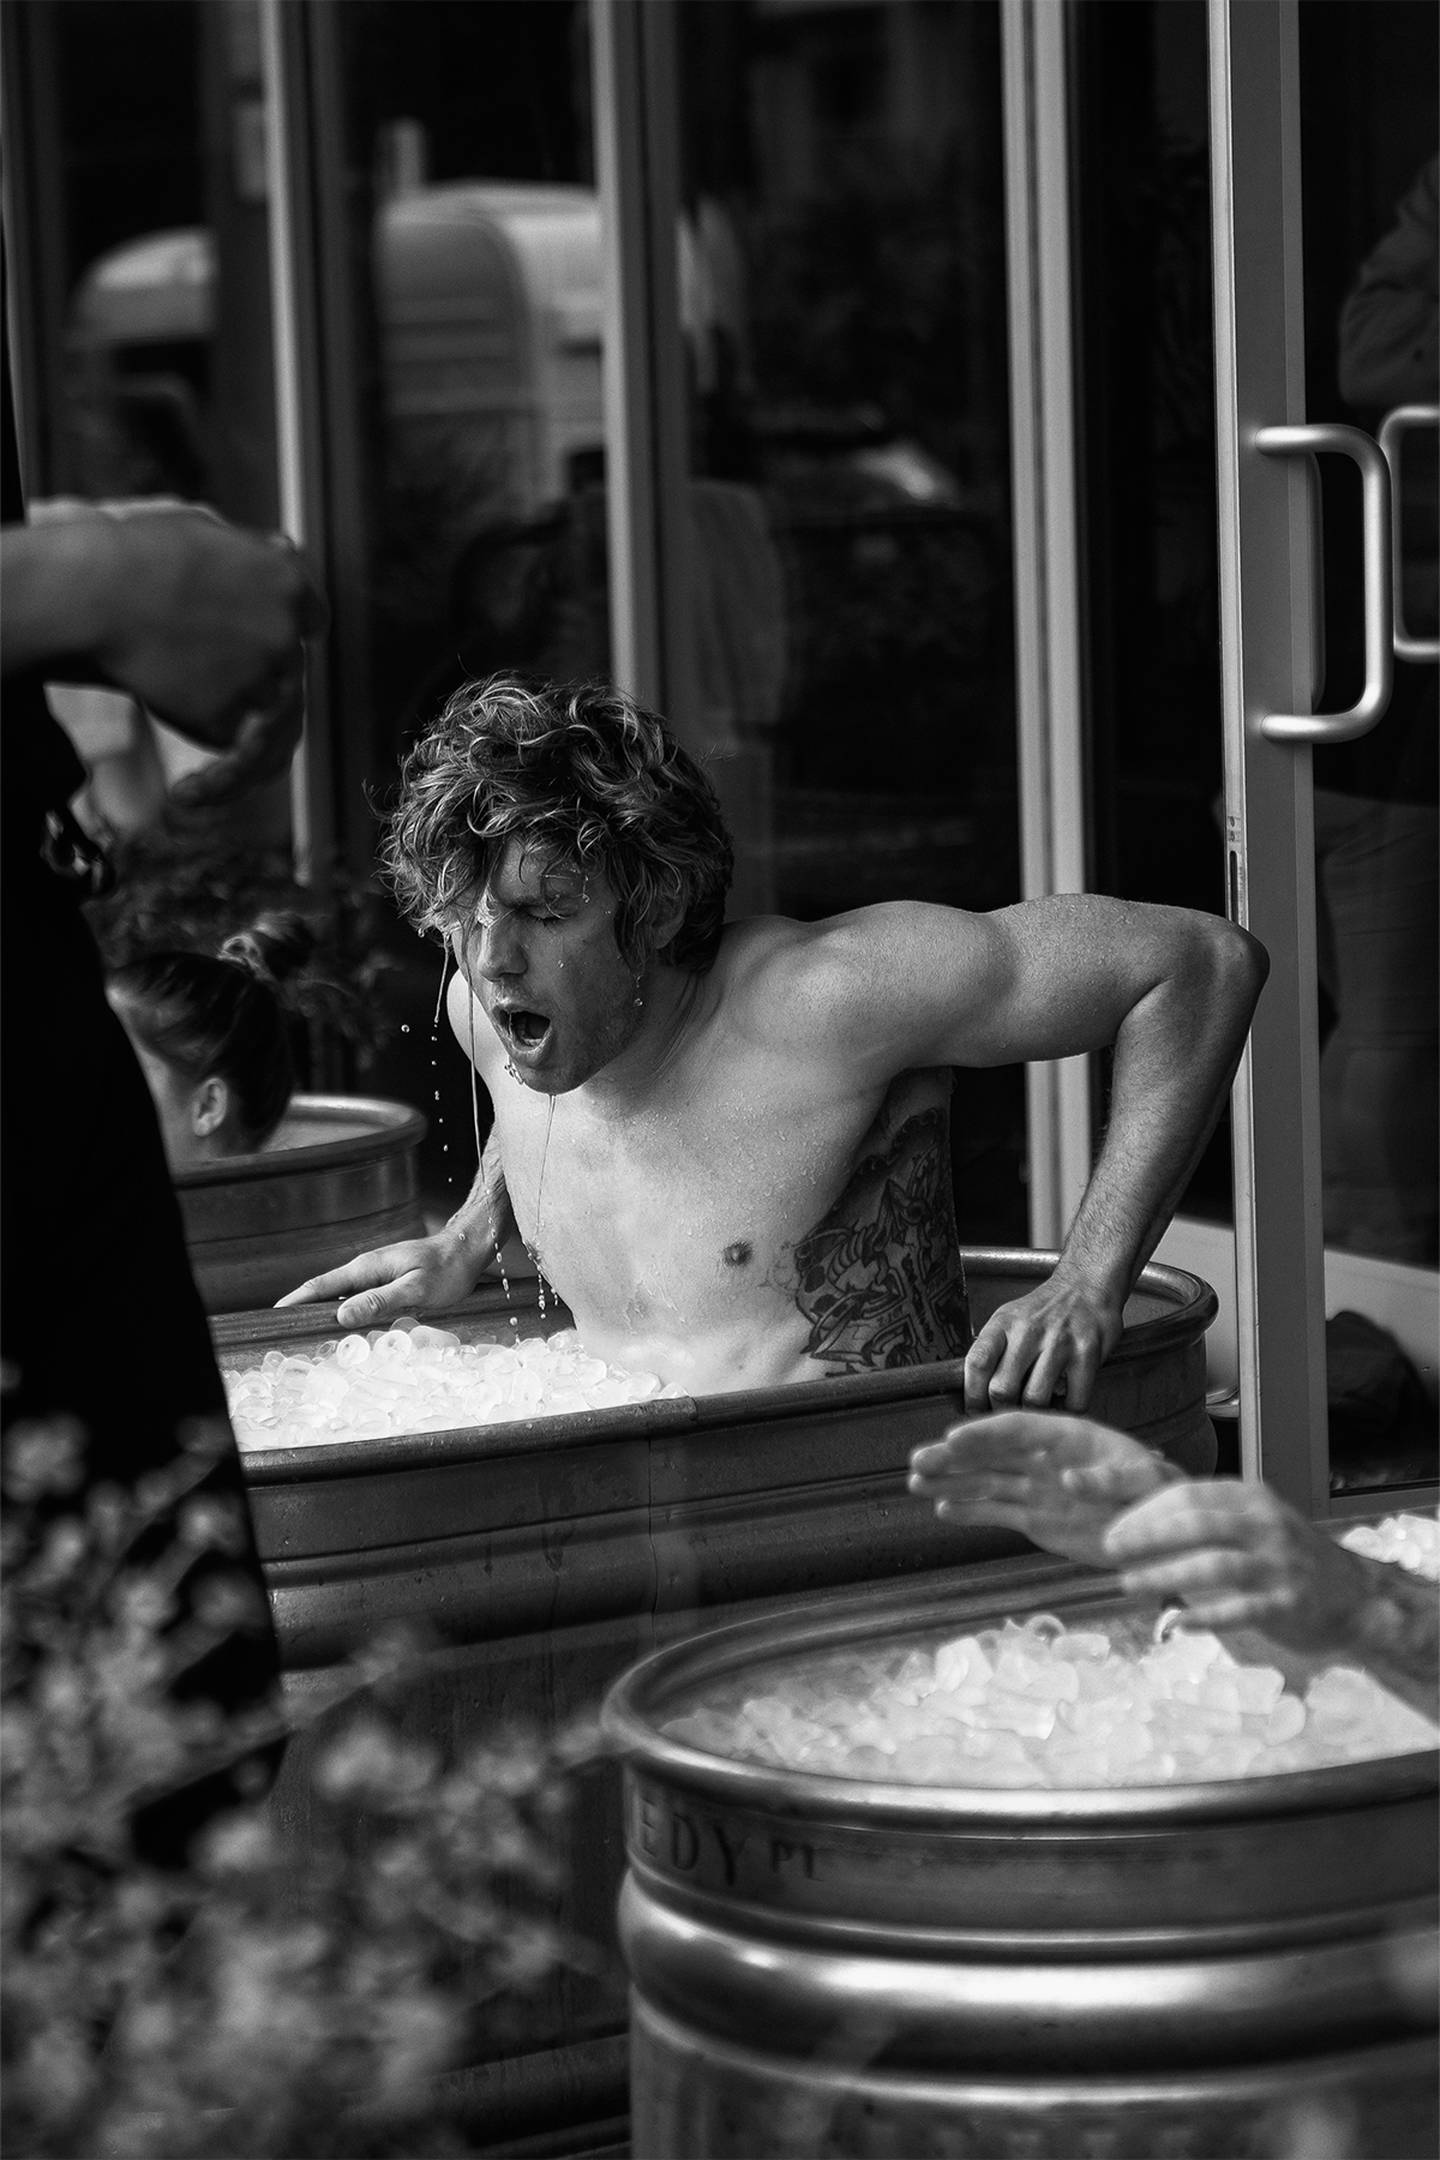 A man in an ice bath